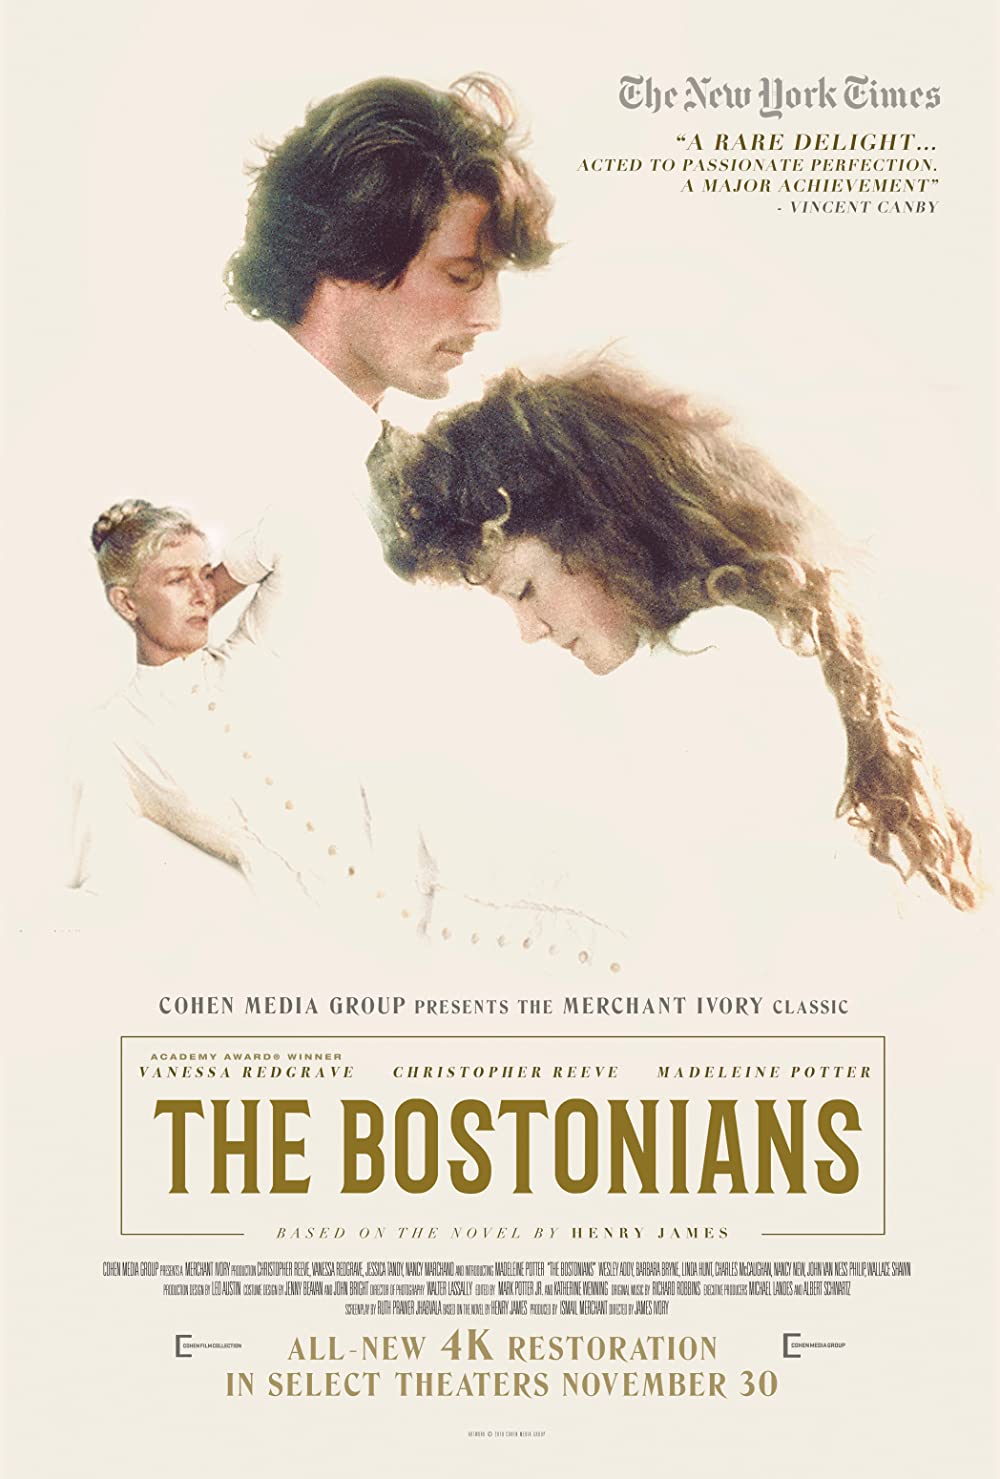 Filmbeschreibung zu The Bostonians